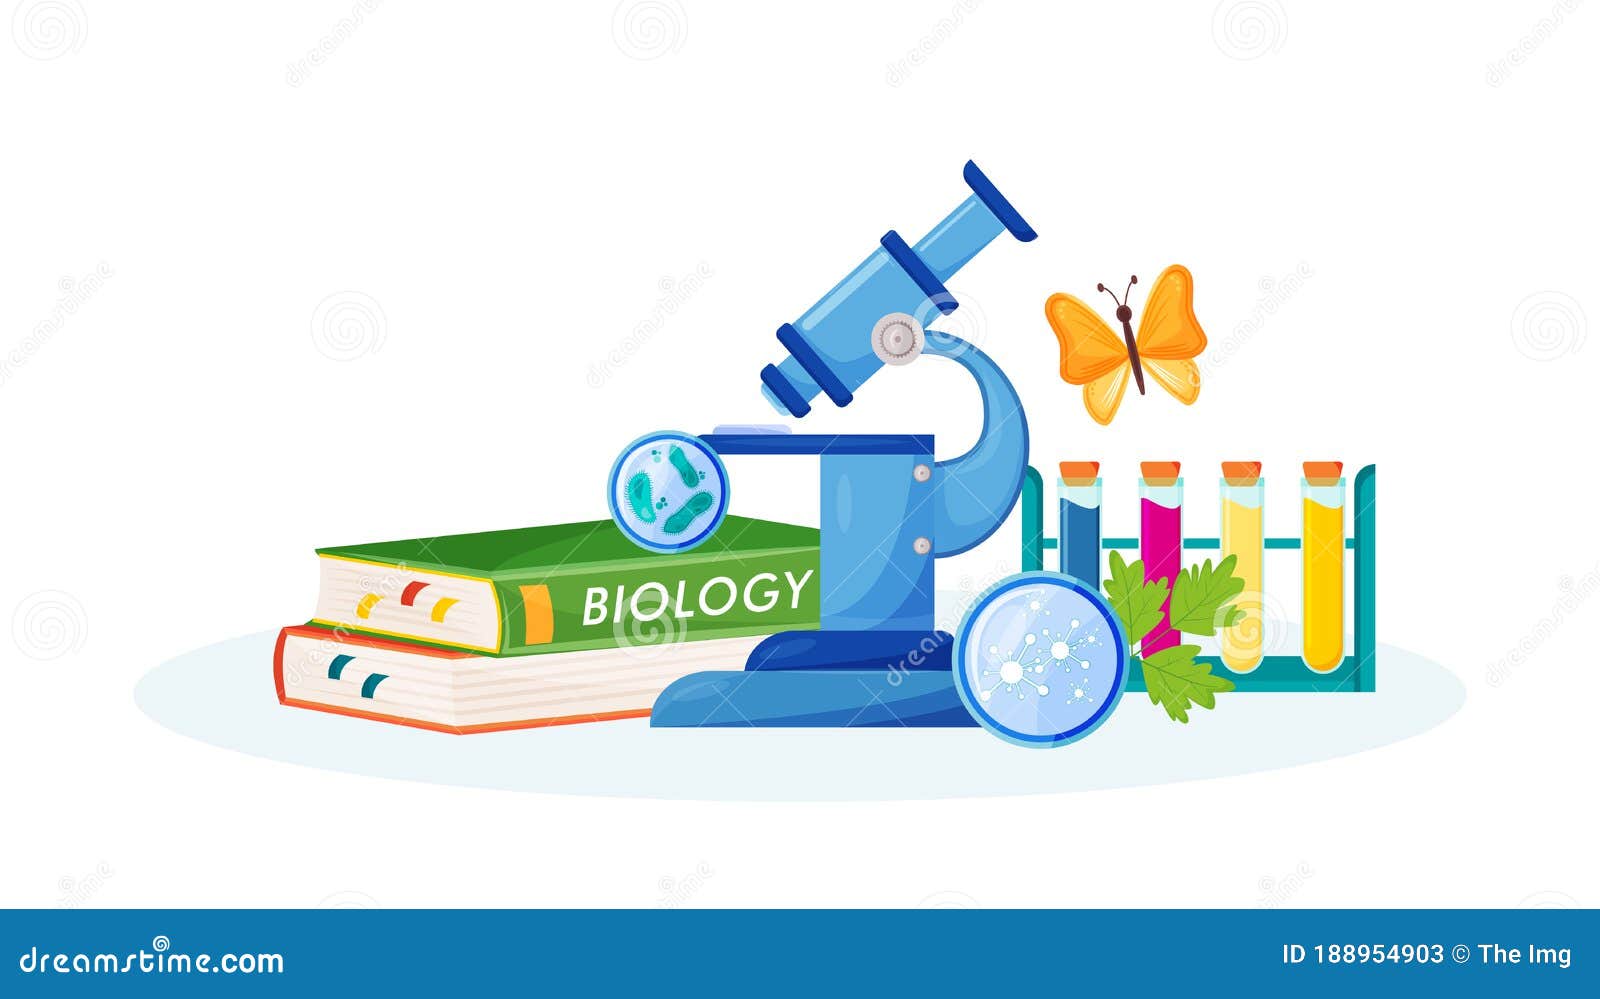 biology flat concept  